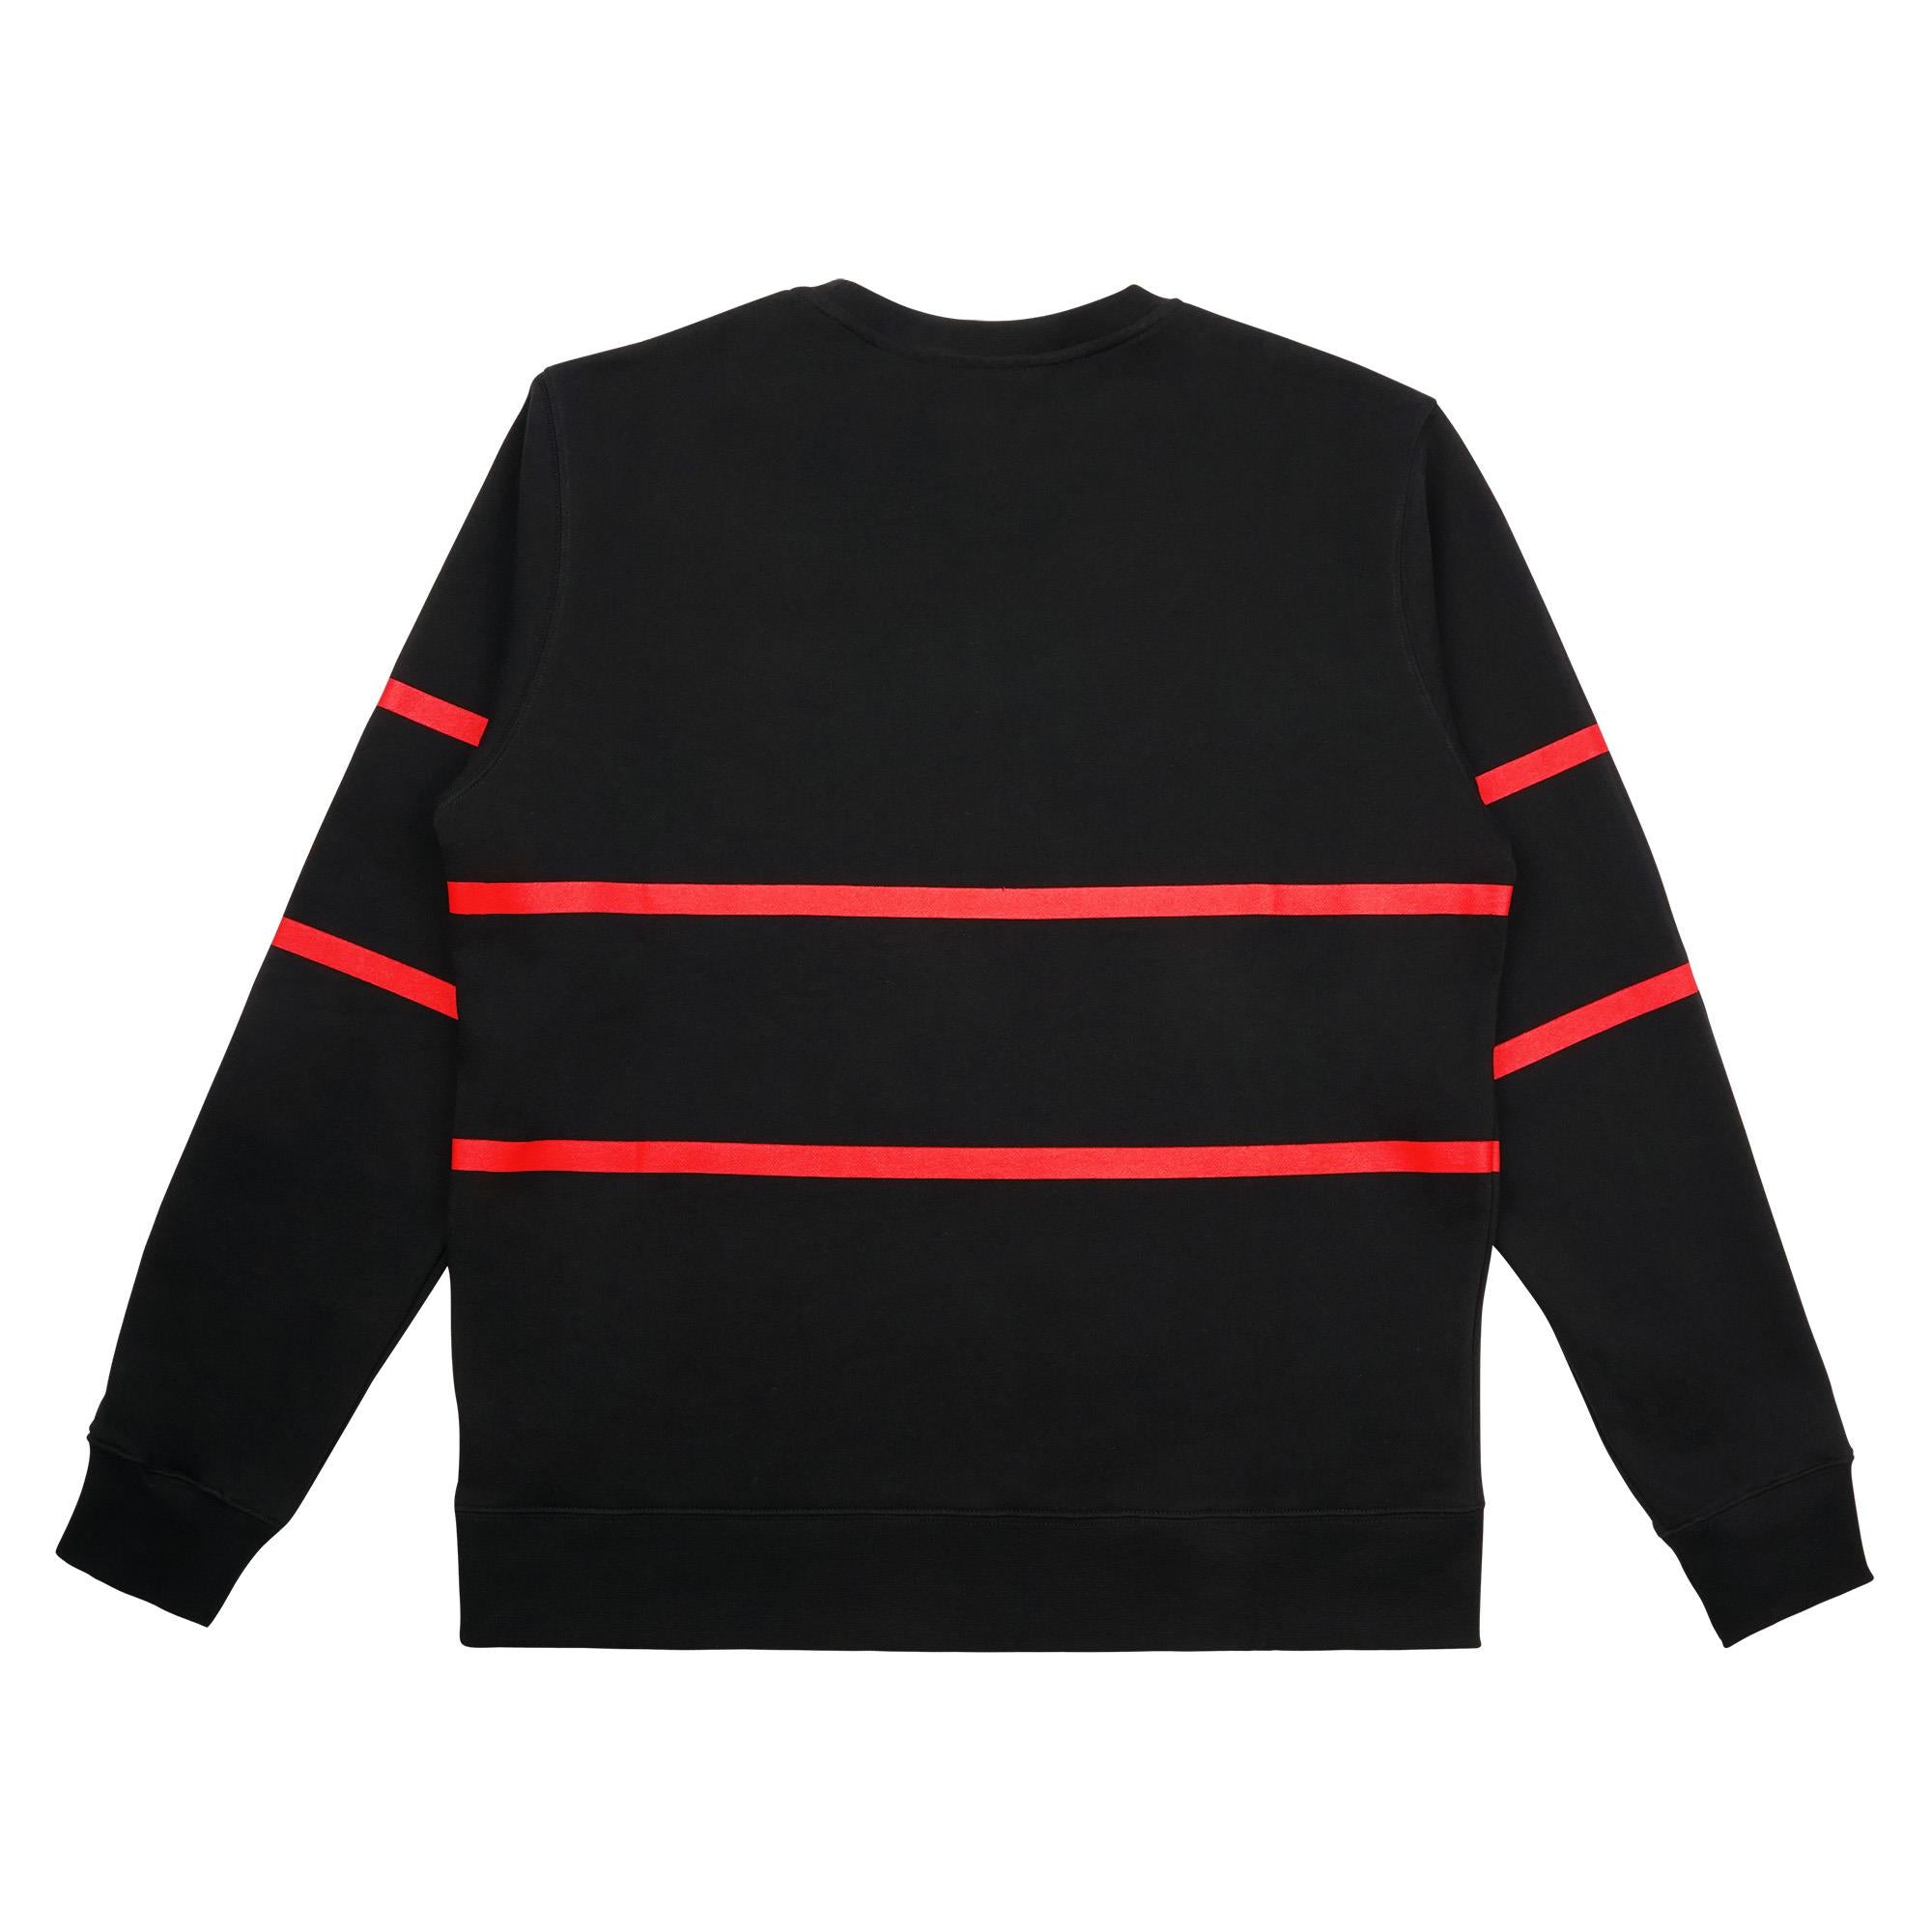 Signature Stripes sweatshirt 